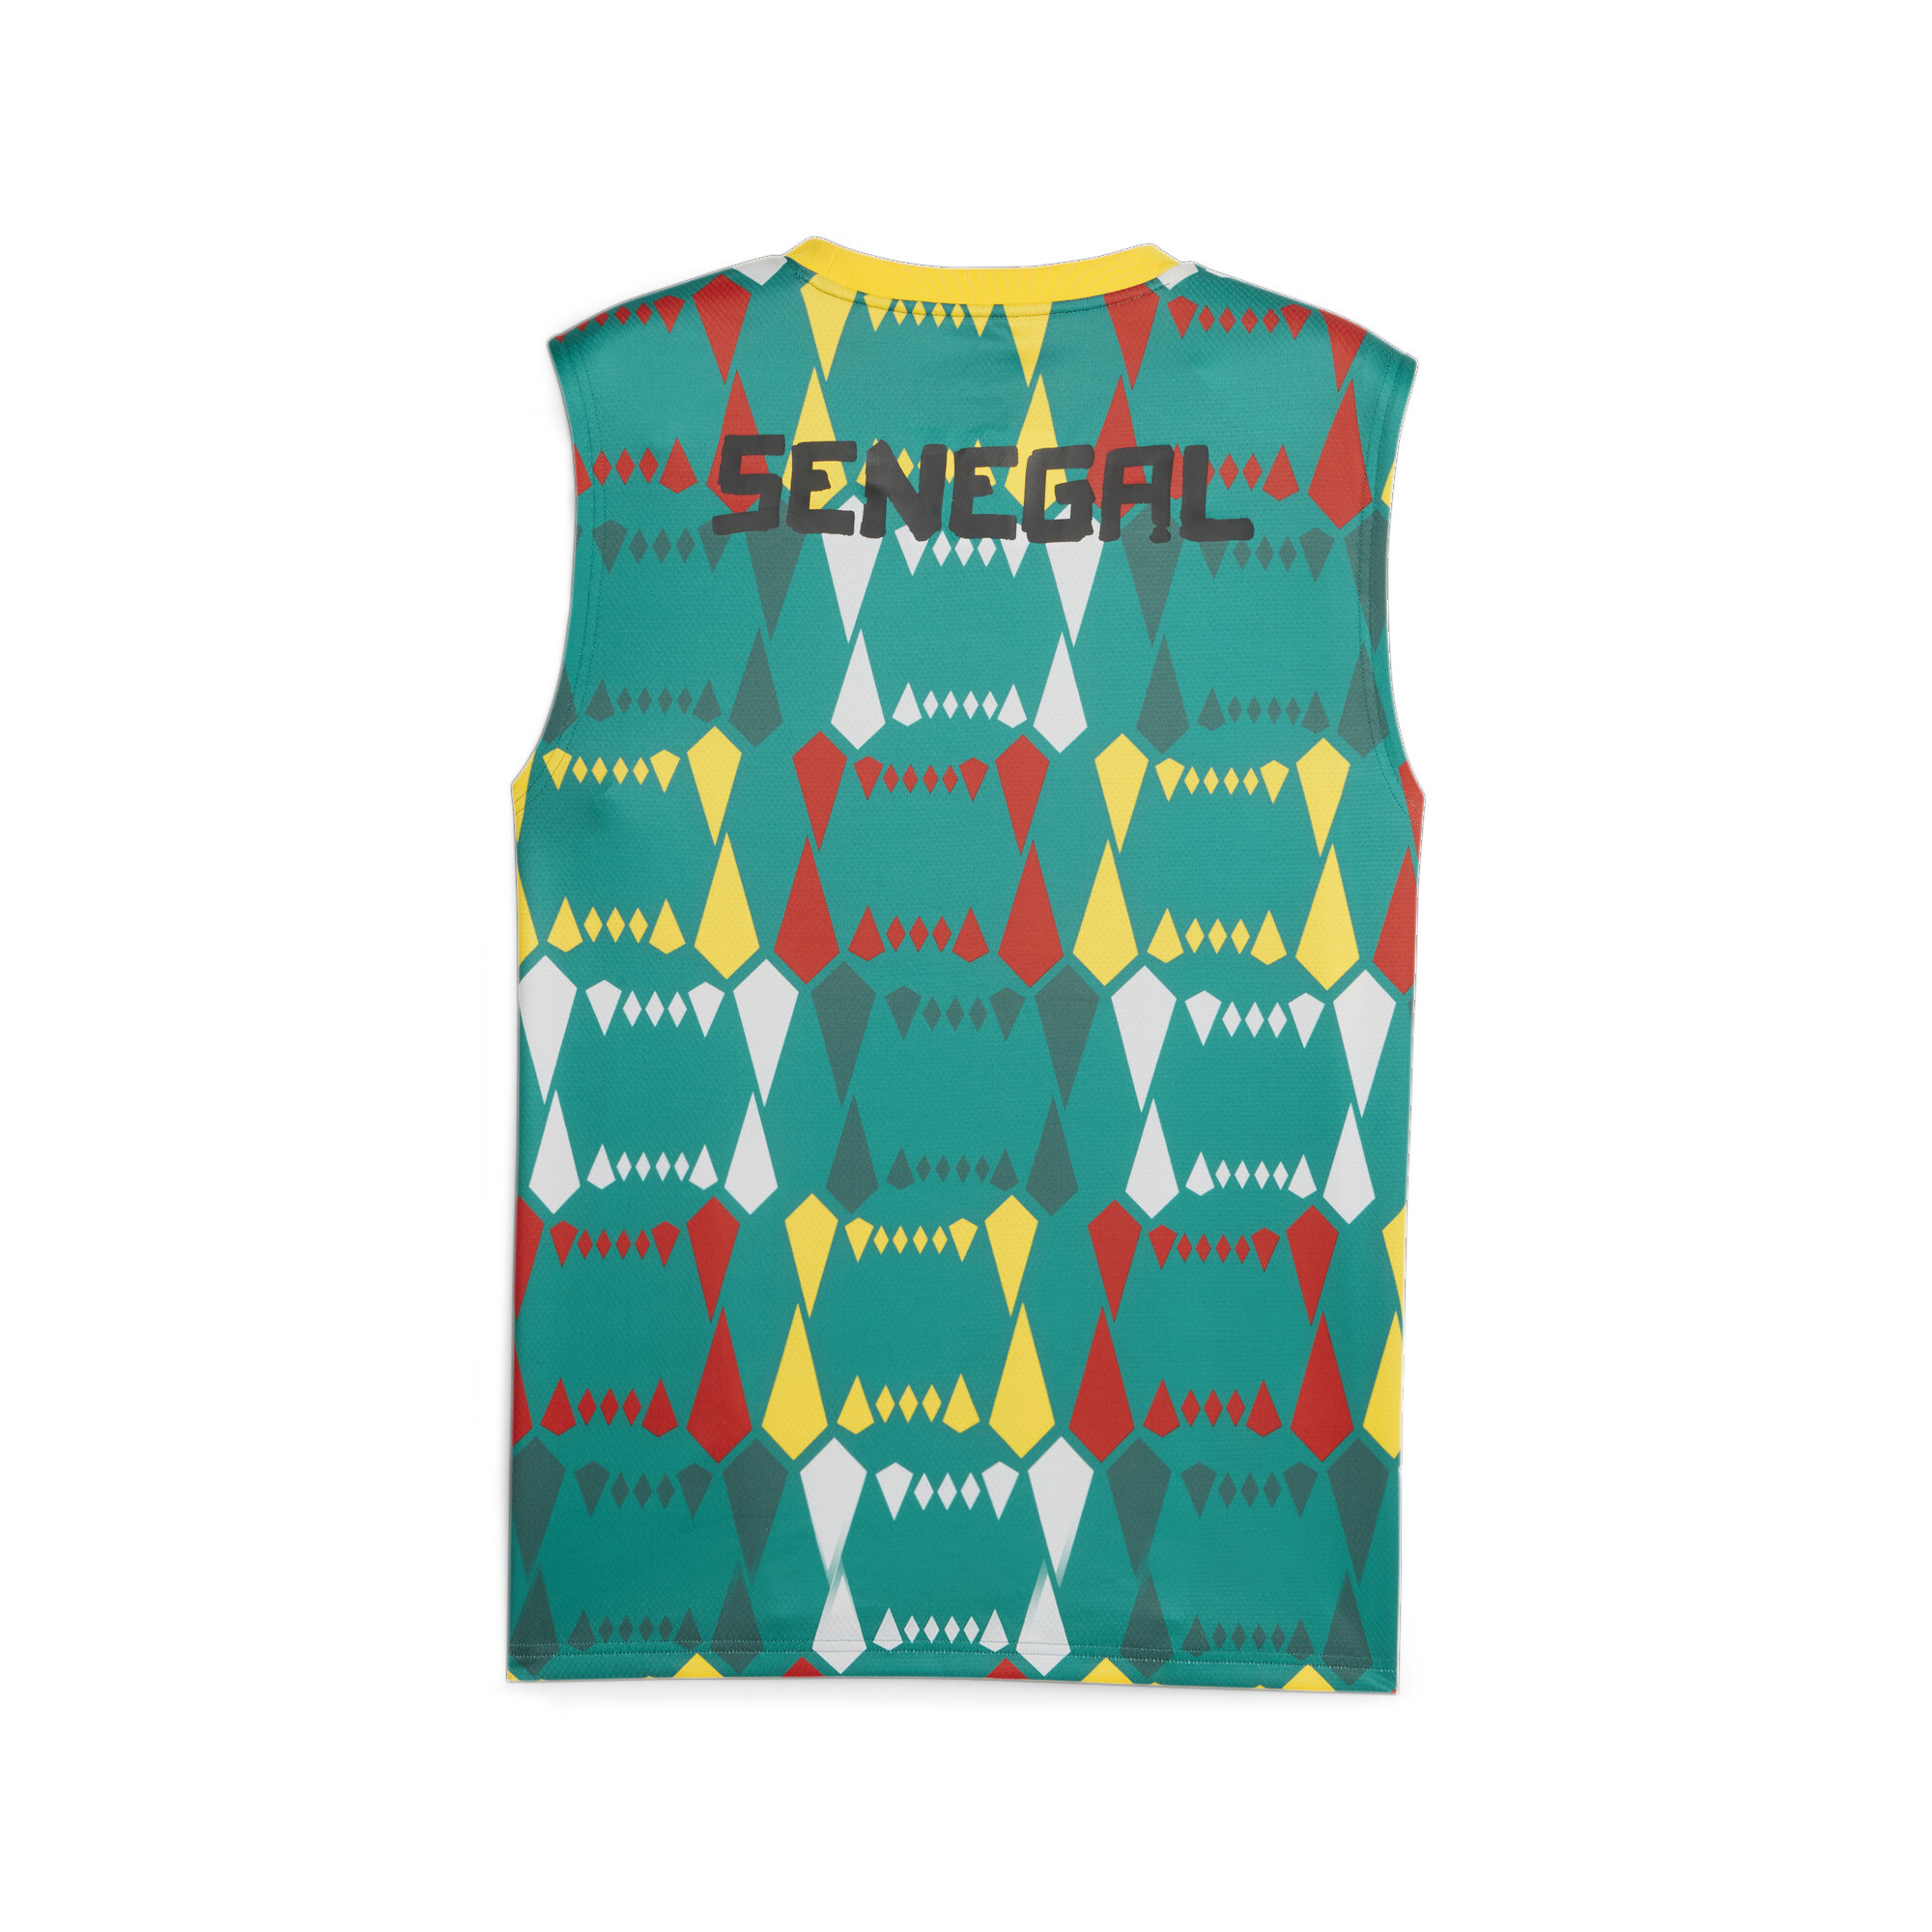 Men's PUMA Senegal FtblCulture Sleeveless Jersey In Green, Size Medium